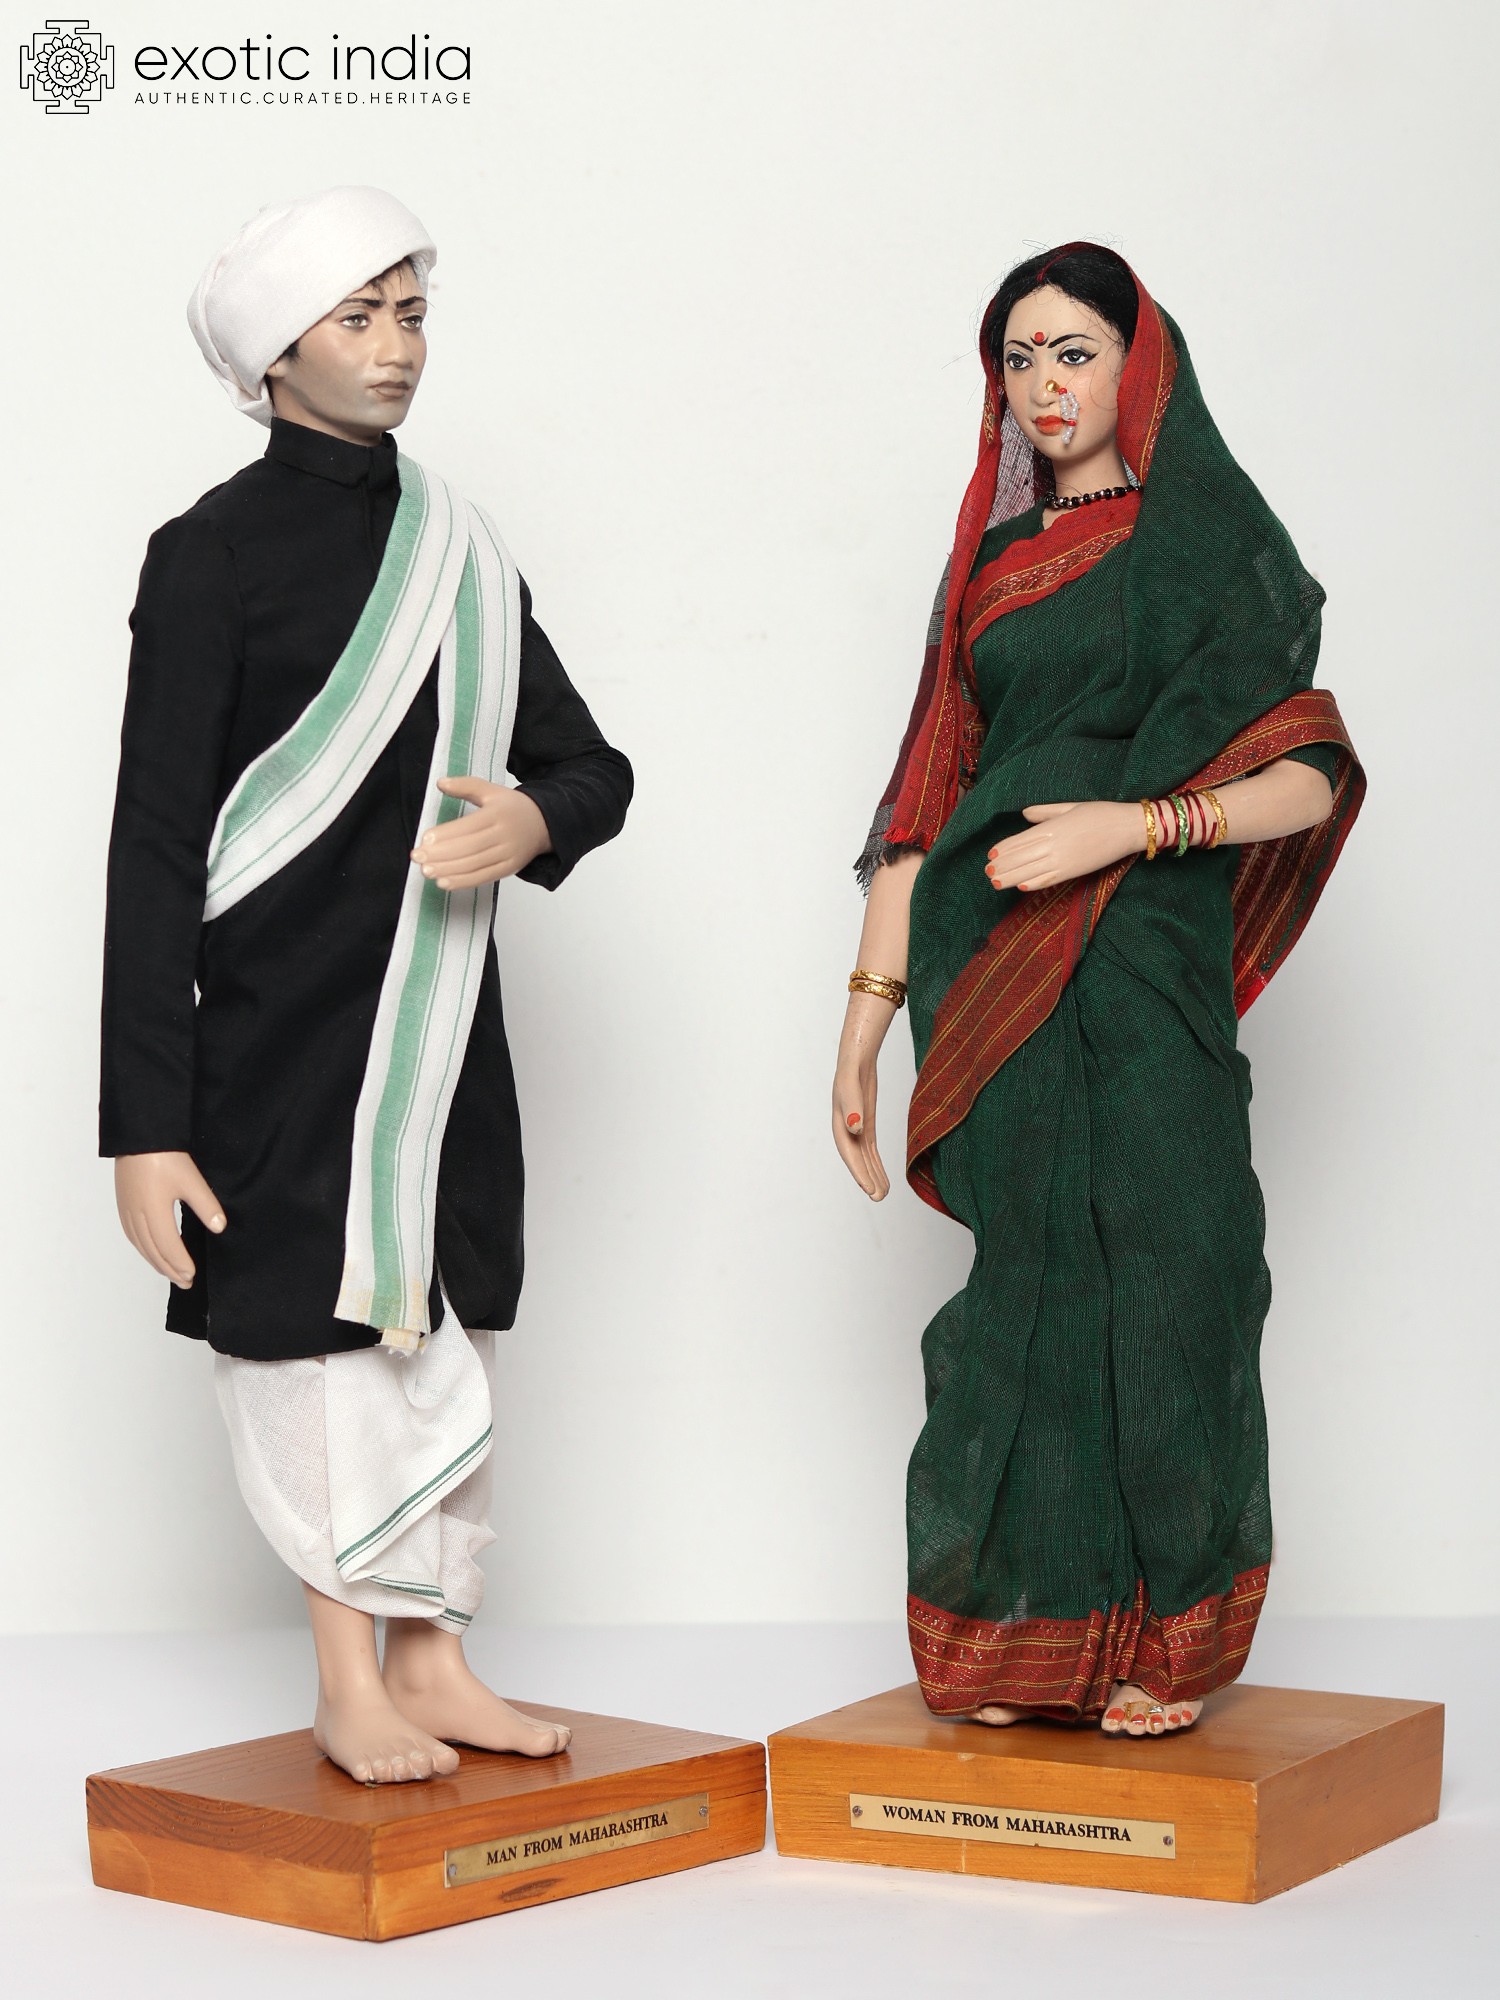 Portrait of Maharashtrian couple greeting - Stock Photo [11455920] - PIXTA